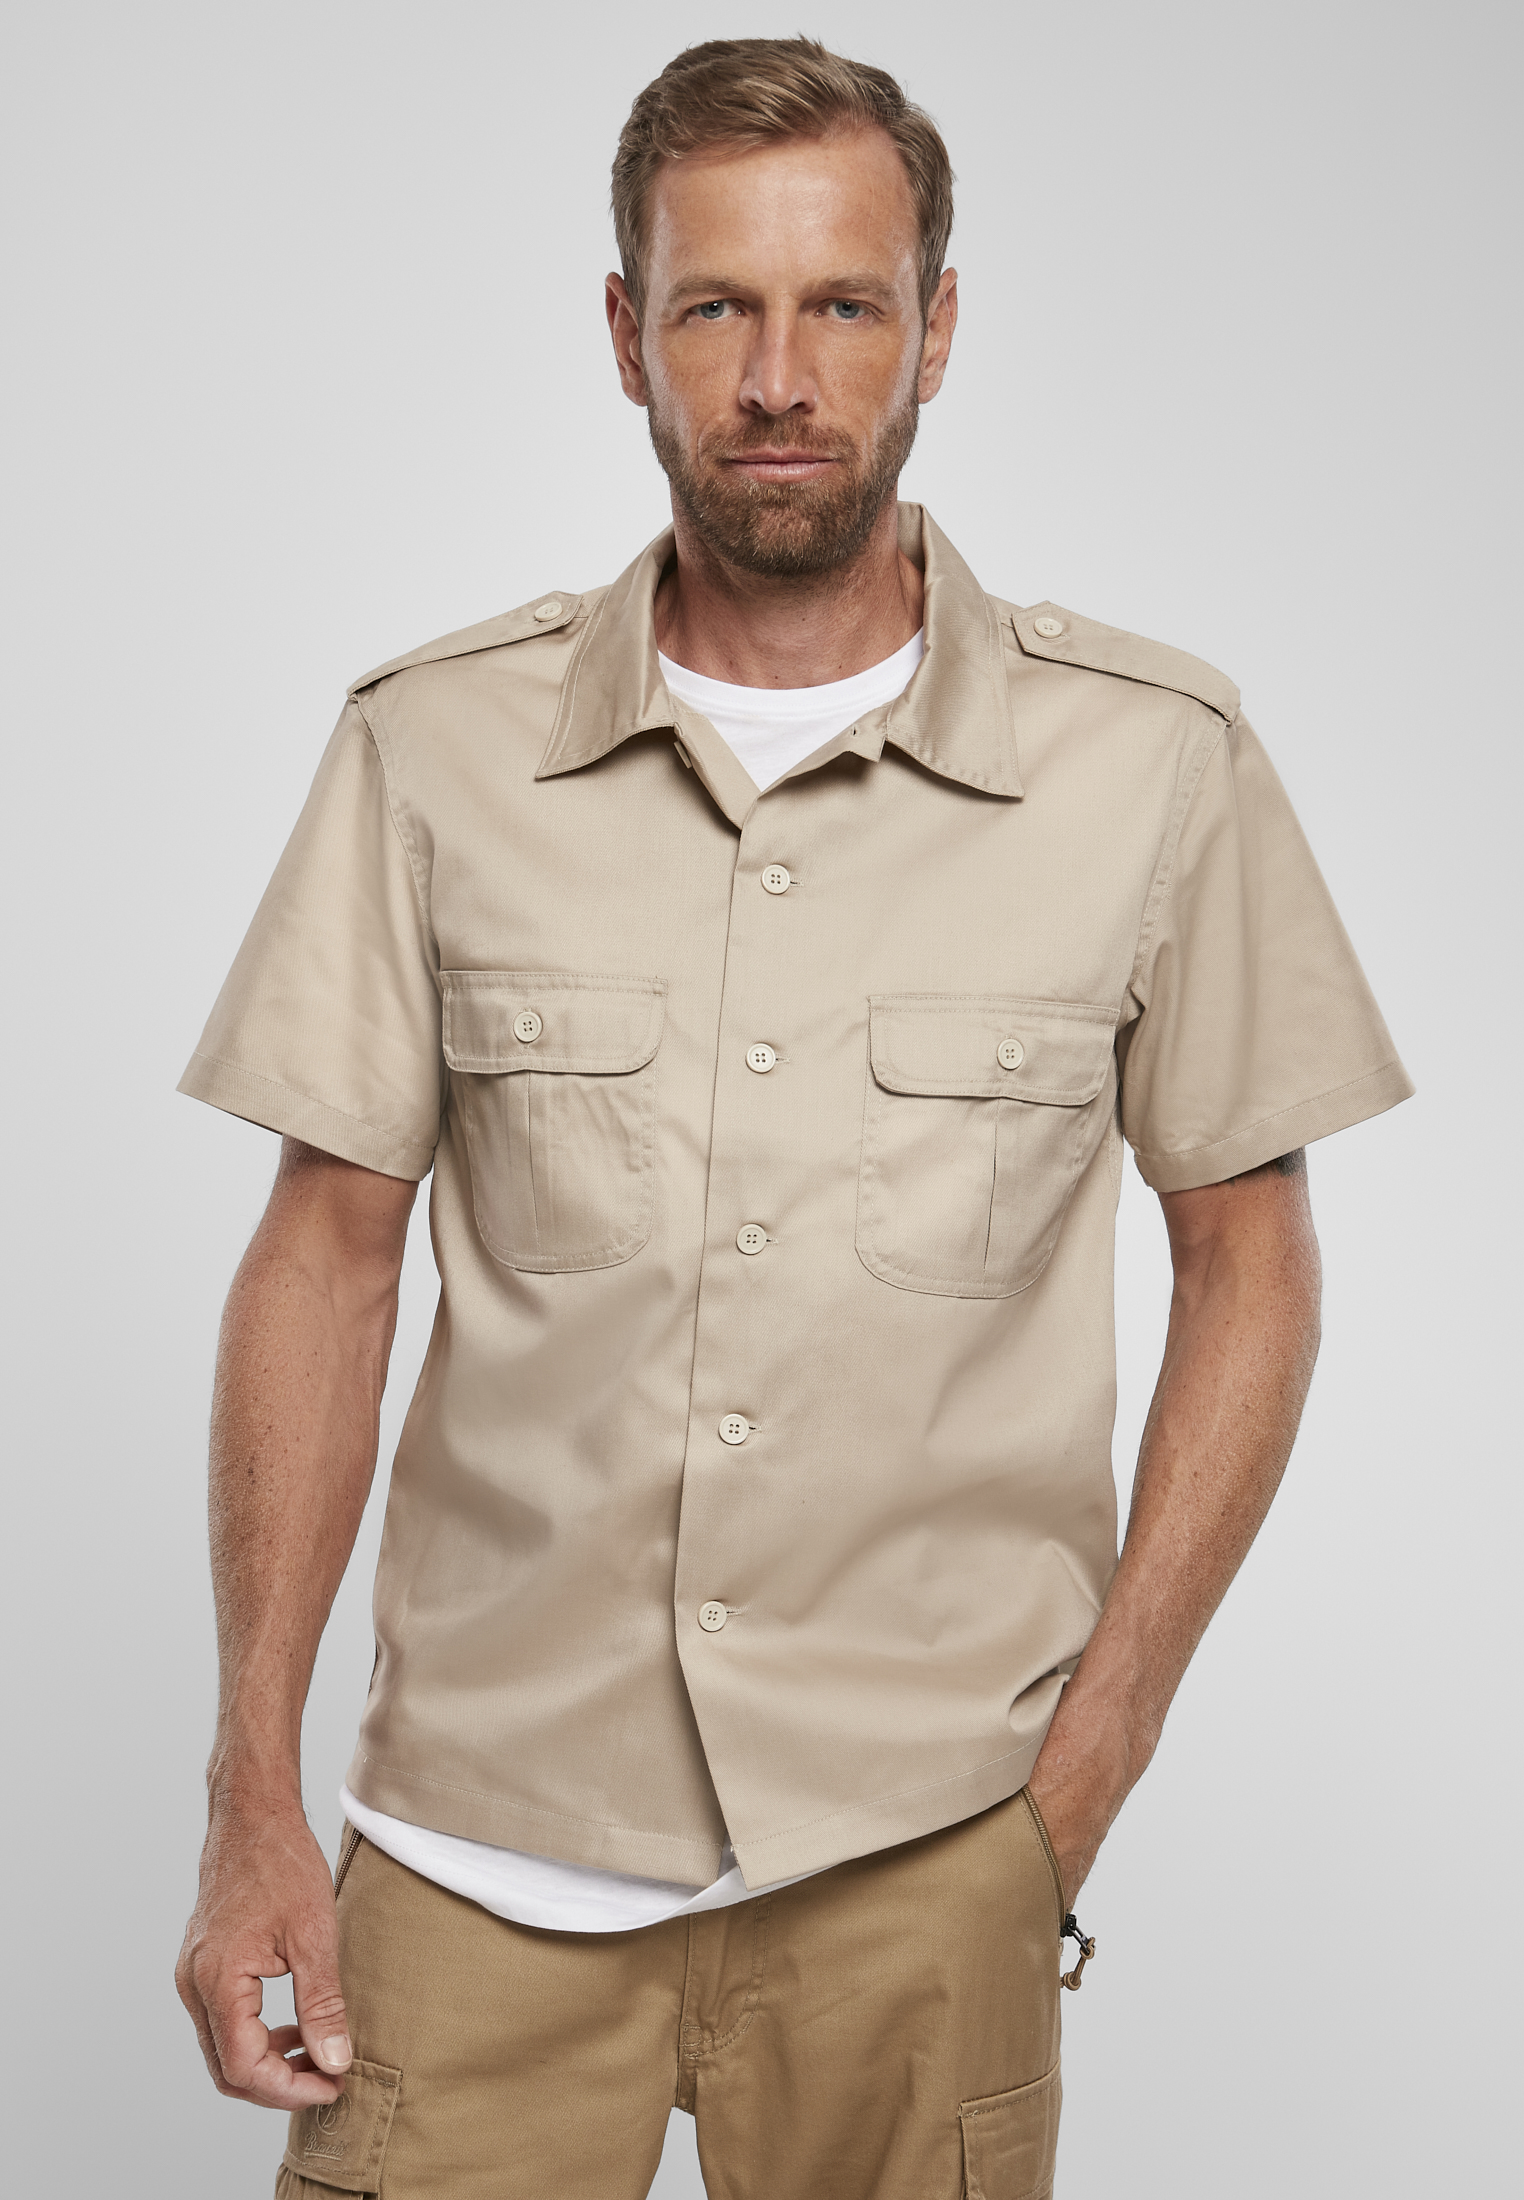 Hemden Short Sleeves US Shirt in Farbe beige